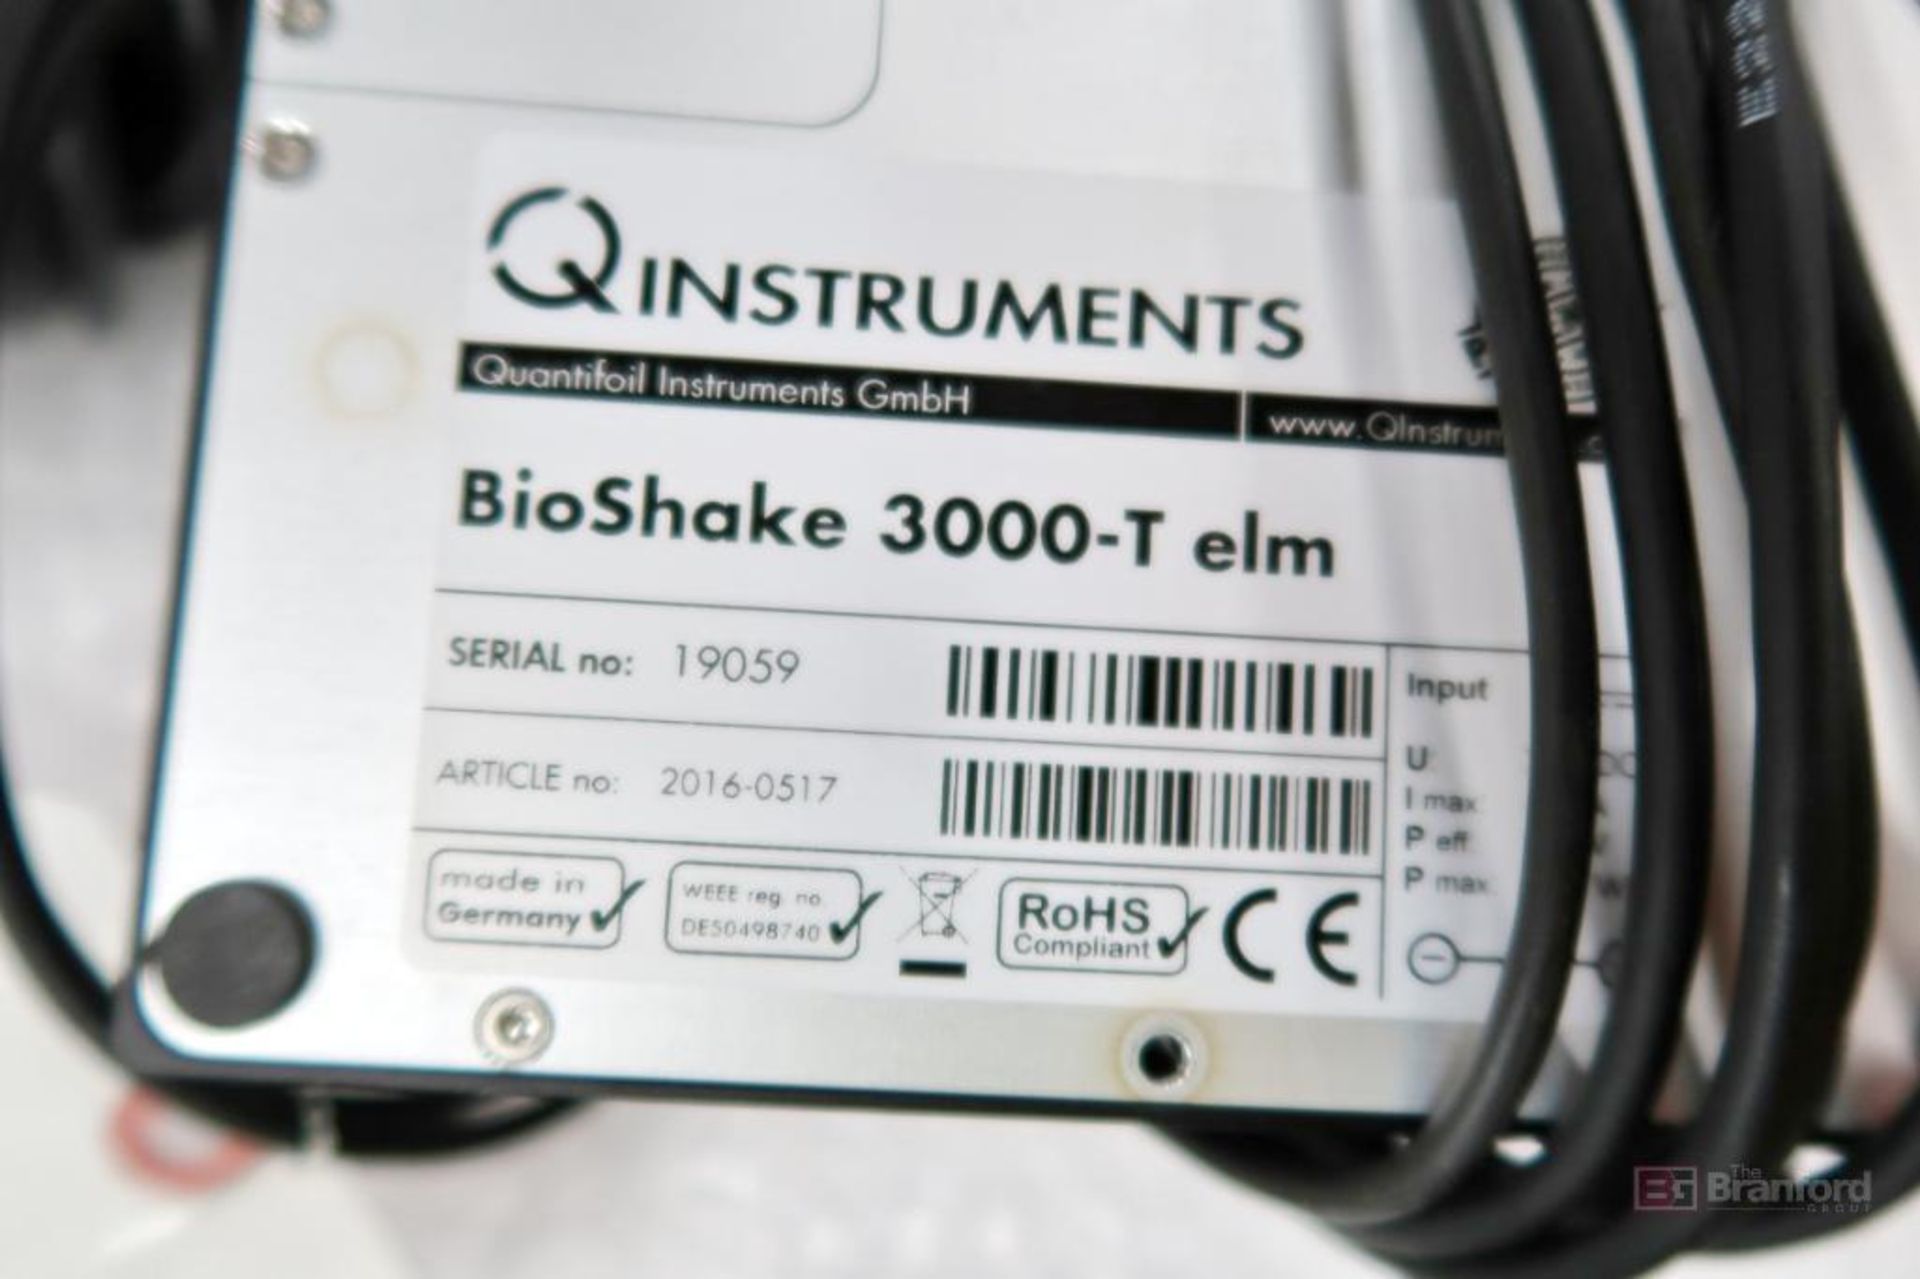 Q Instruments BioShake 3000-T elm Microplate Shaker - Image 2 of 2